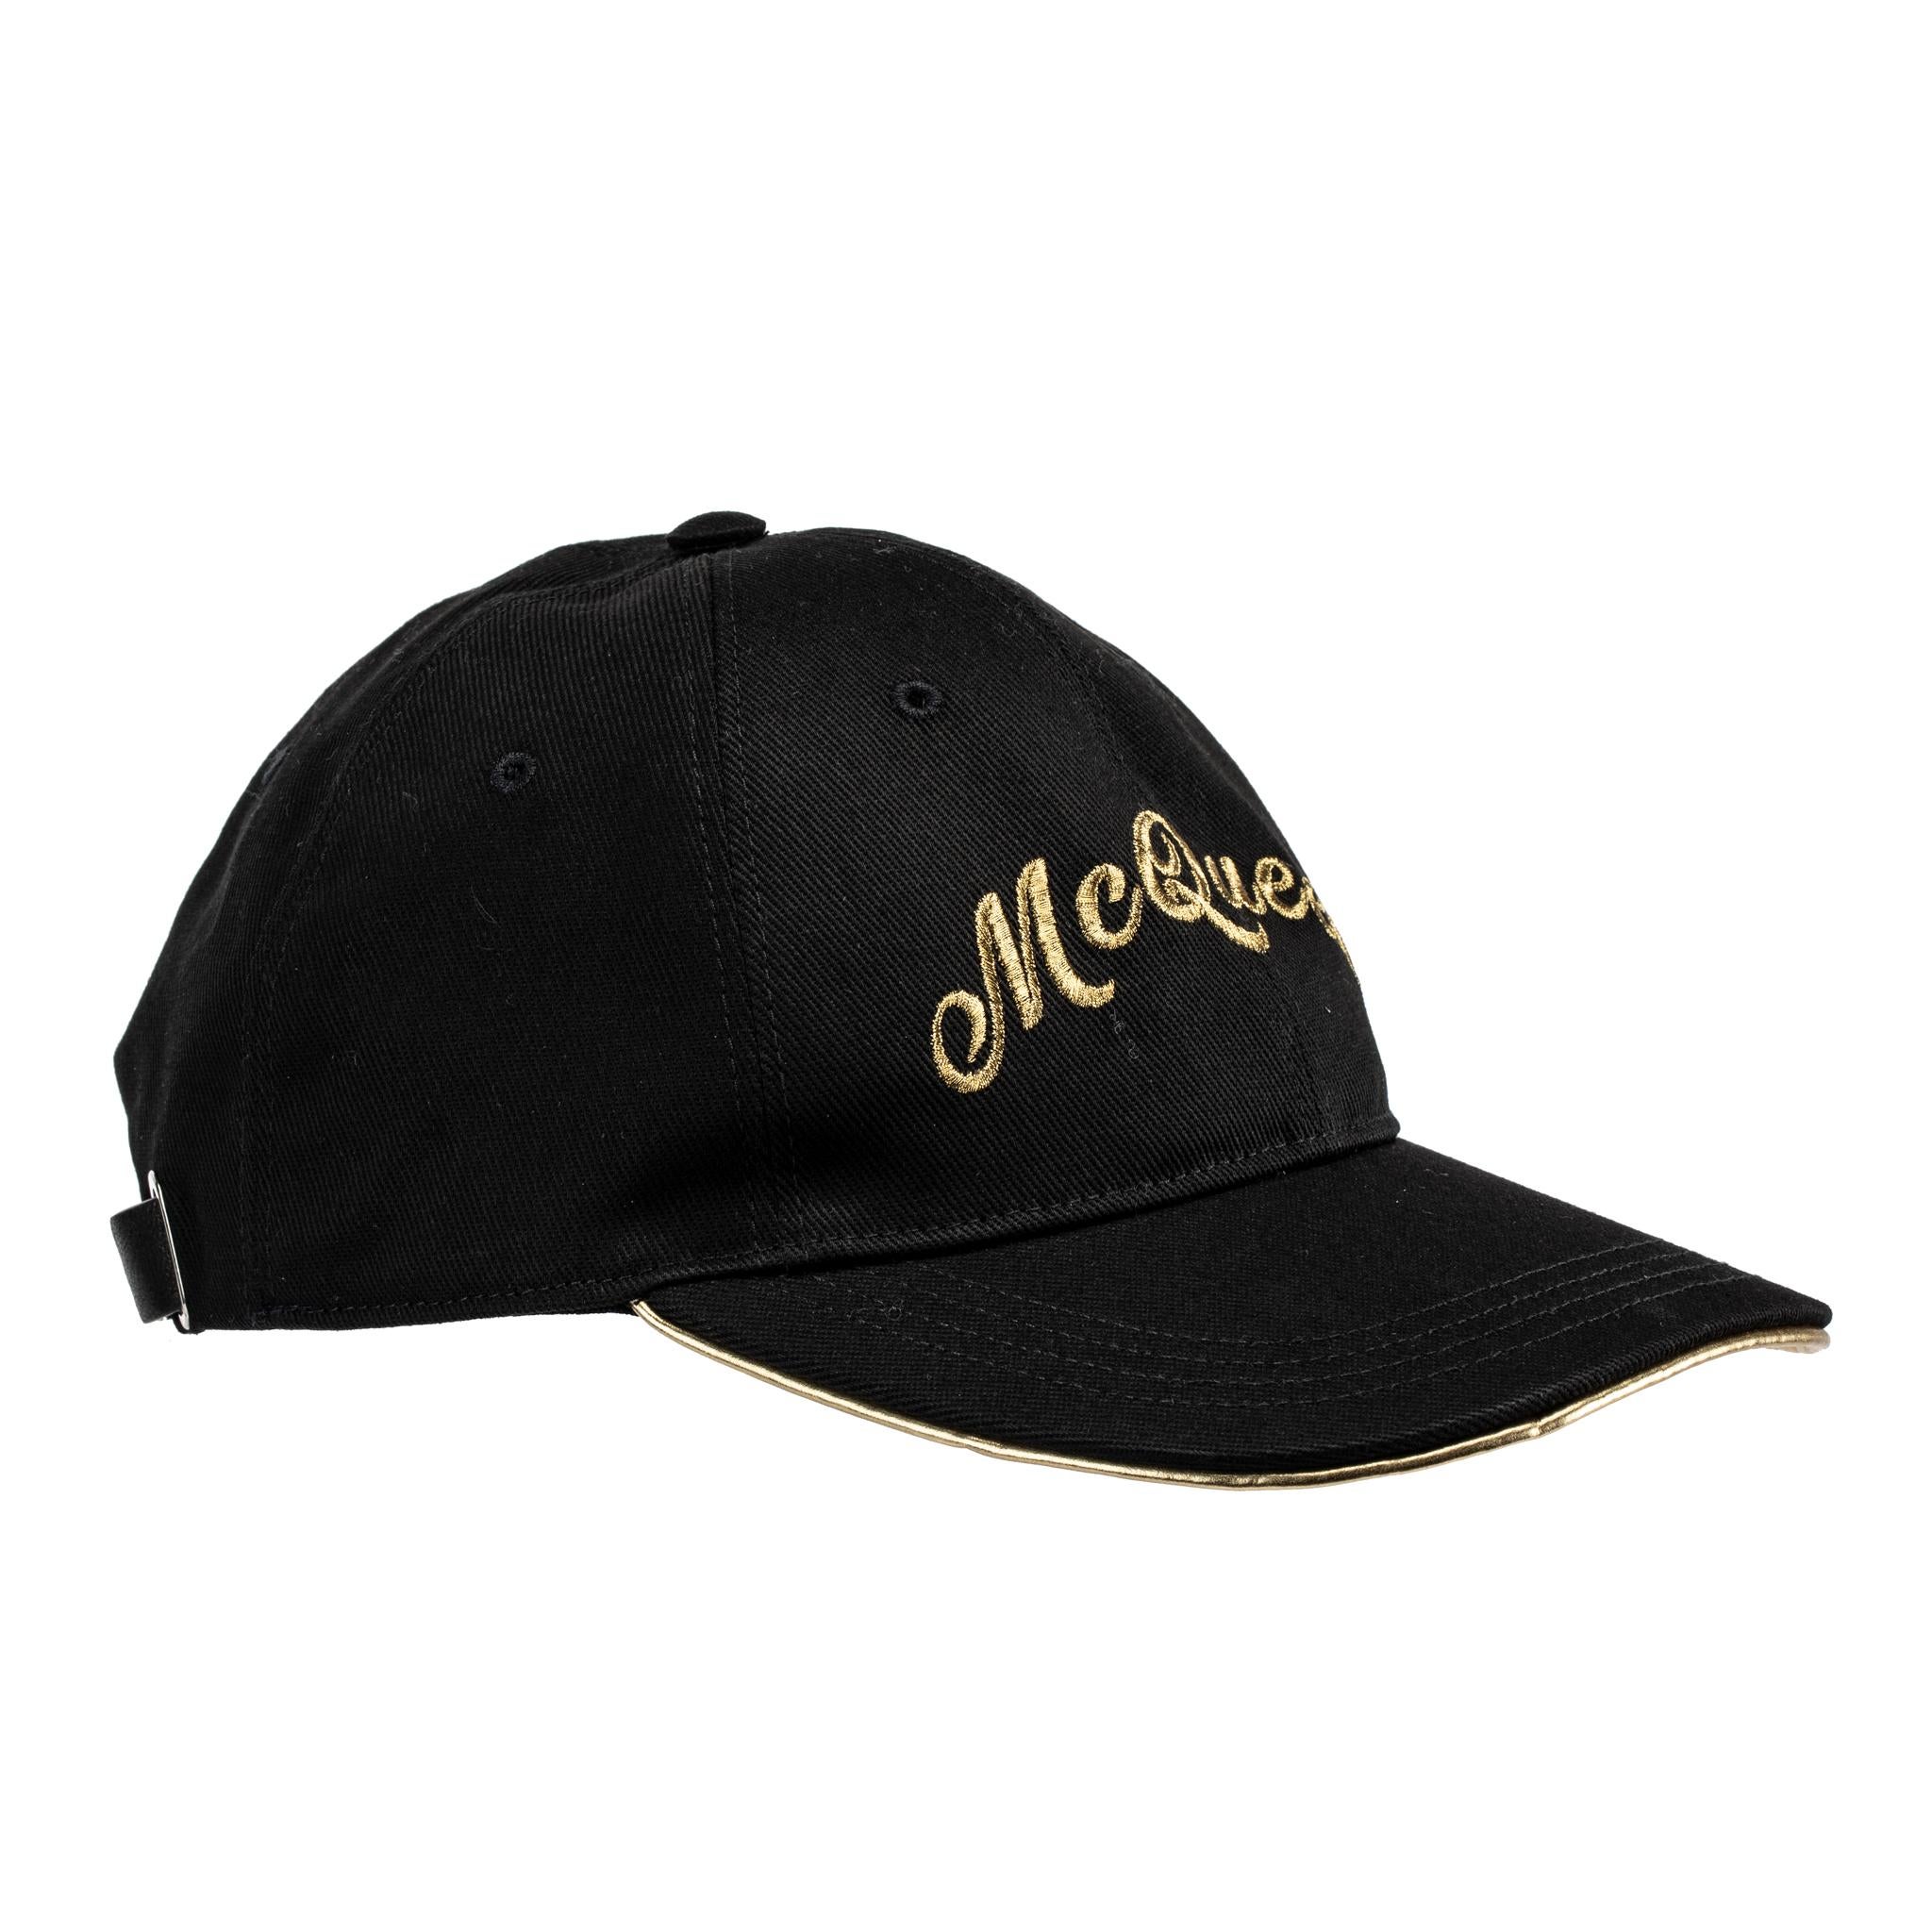 Women's or Men's Alexander McQueen Embroidered Cap Black & Gold For Sale